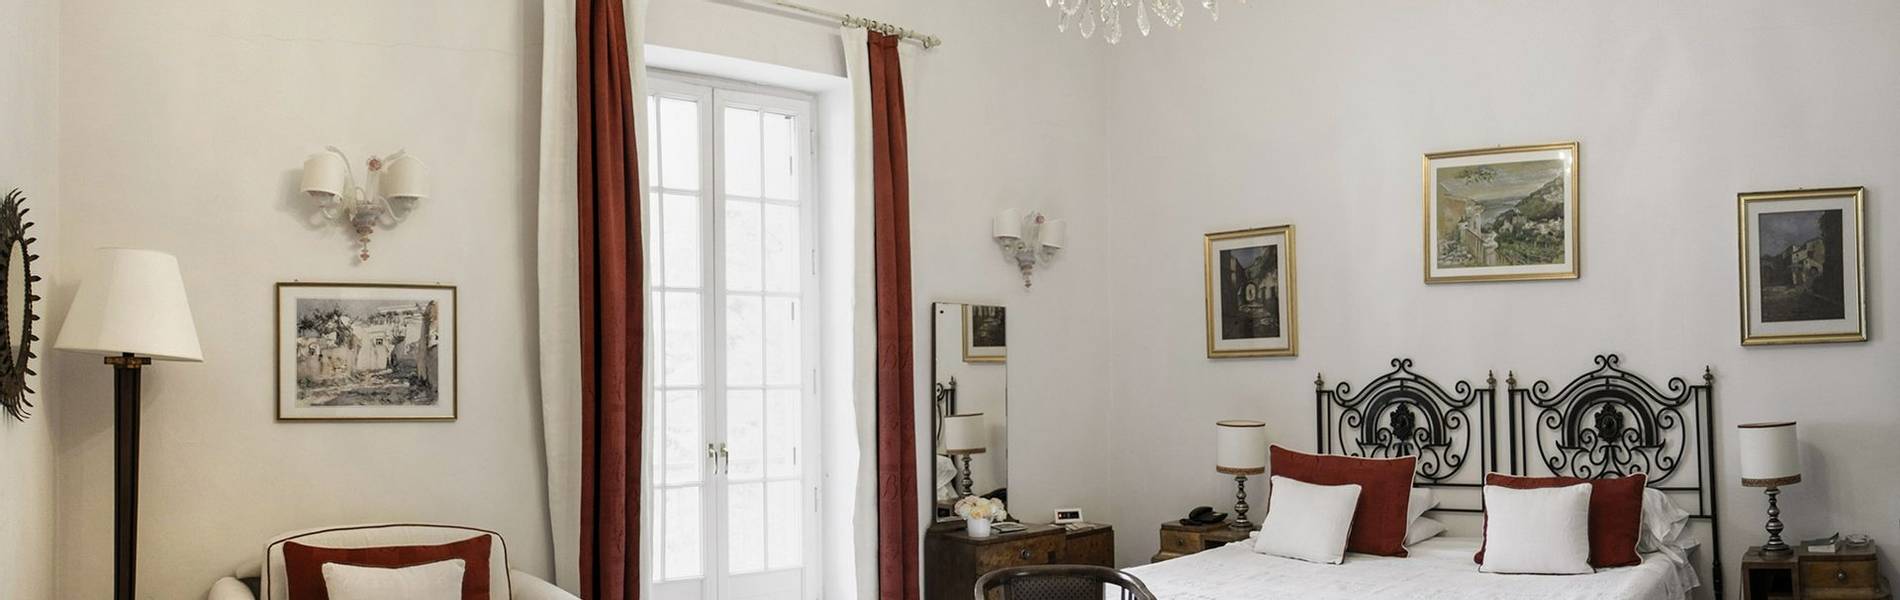 Villa Maria, Amalfi Coast, Italy, Superior room.jpg